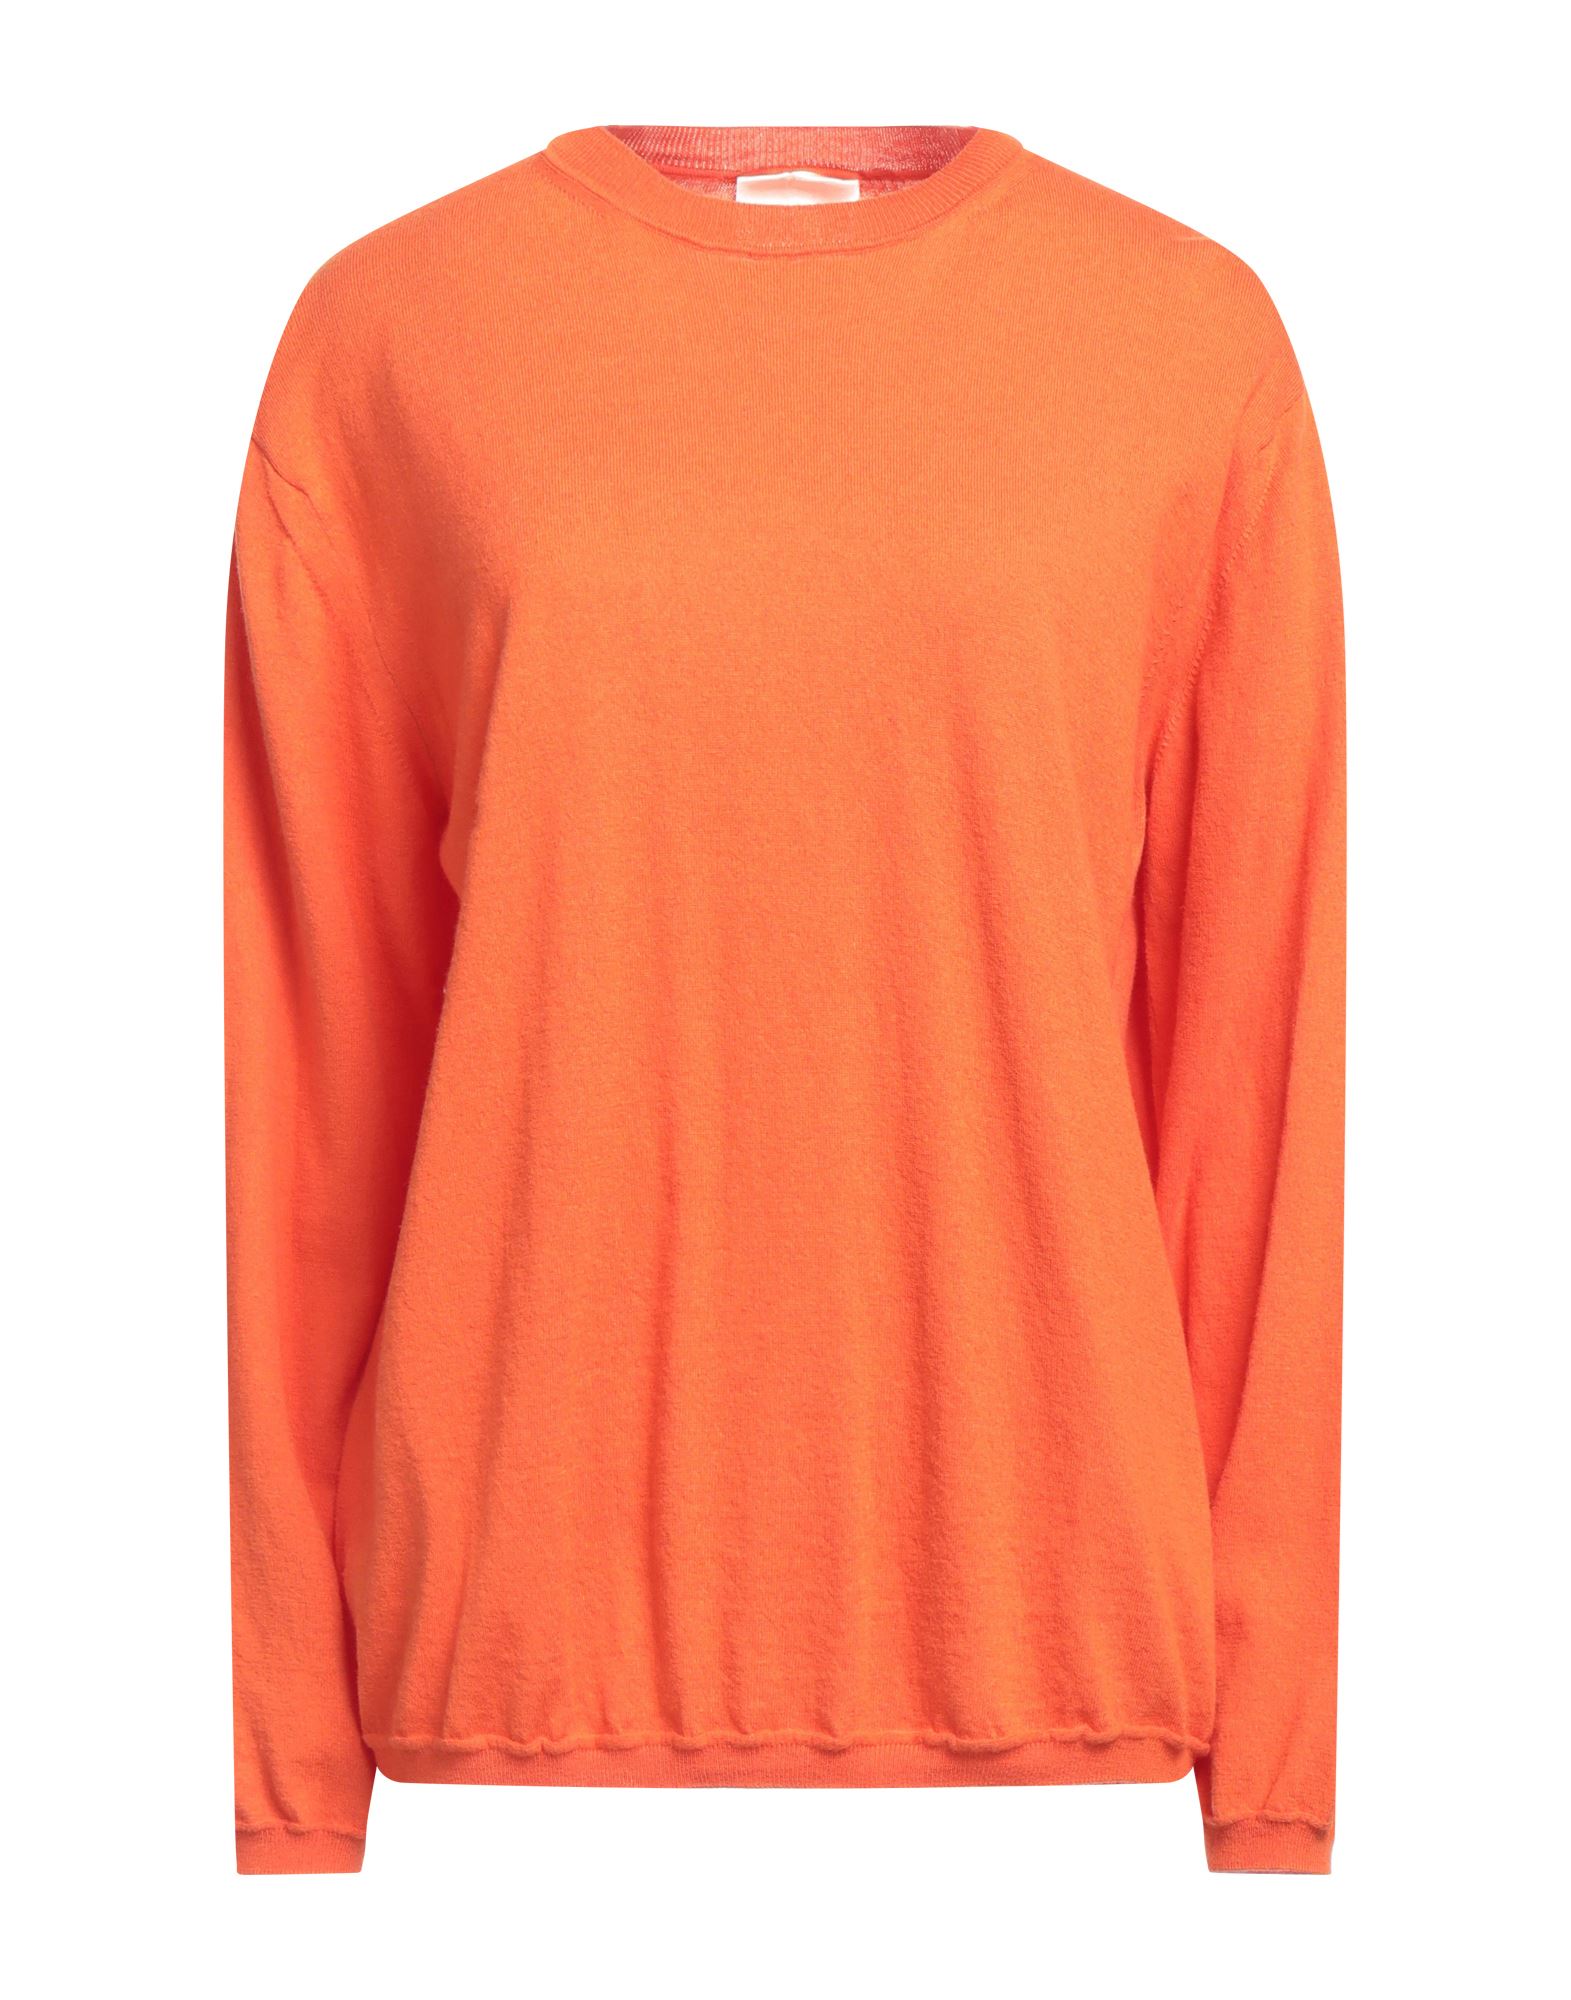 Semicouture Sweaters In Orange